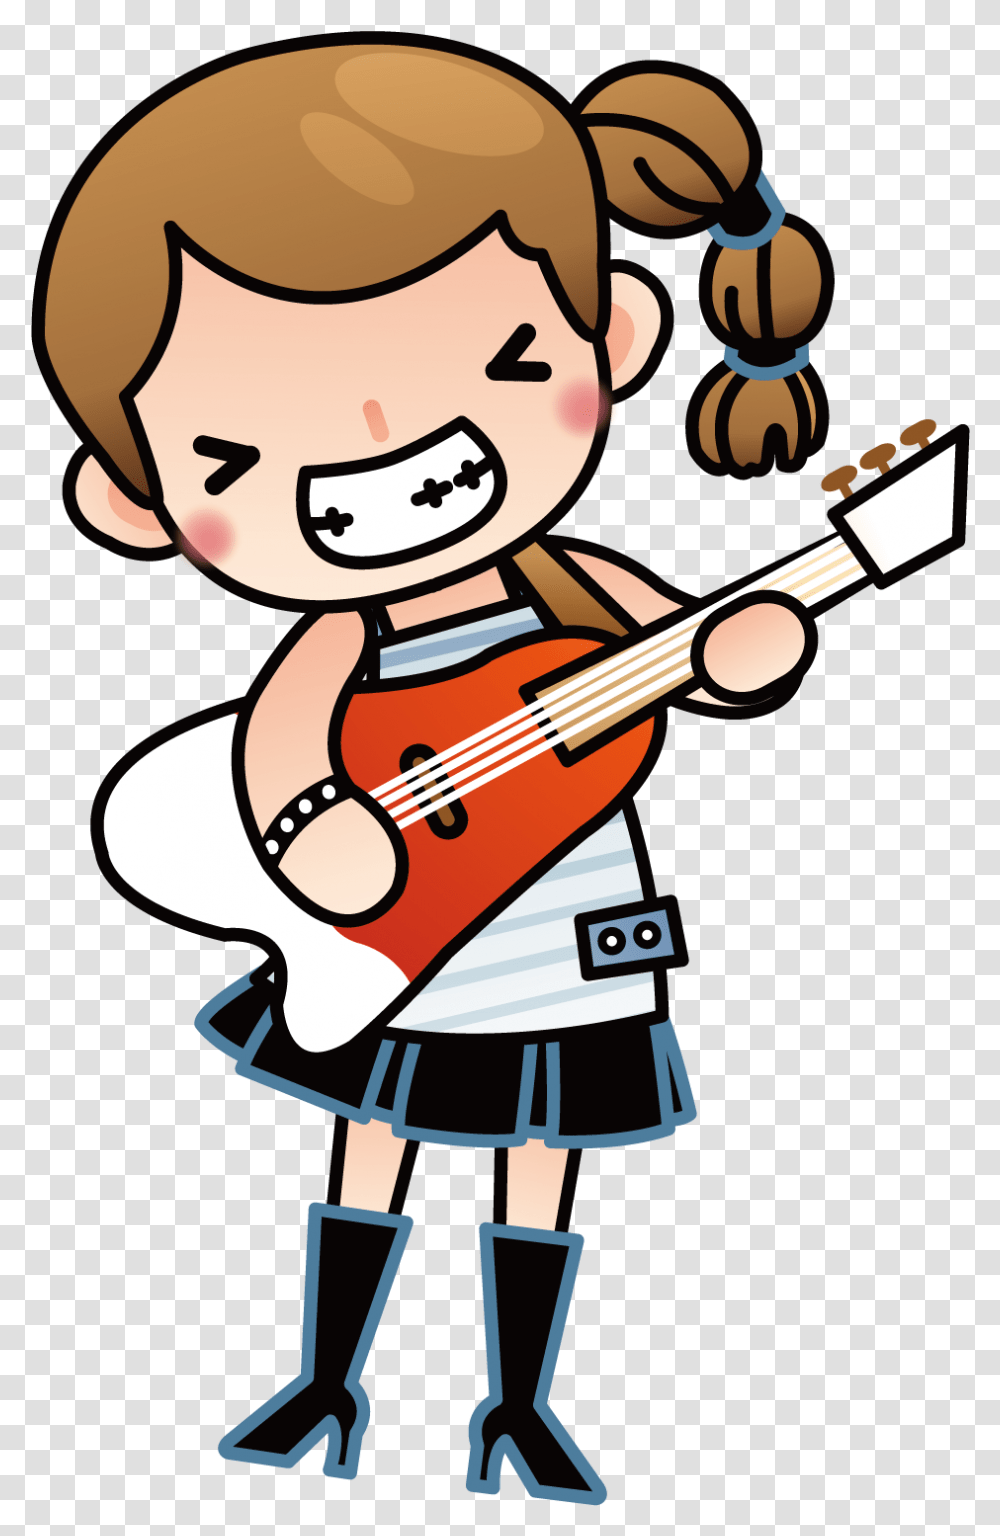 Music Concert Cartoon Illustration Concert Music Illustrations, Leisure Activities, Violin, Musical Instrument, Viola Transparent Png